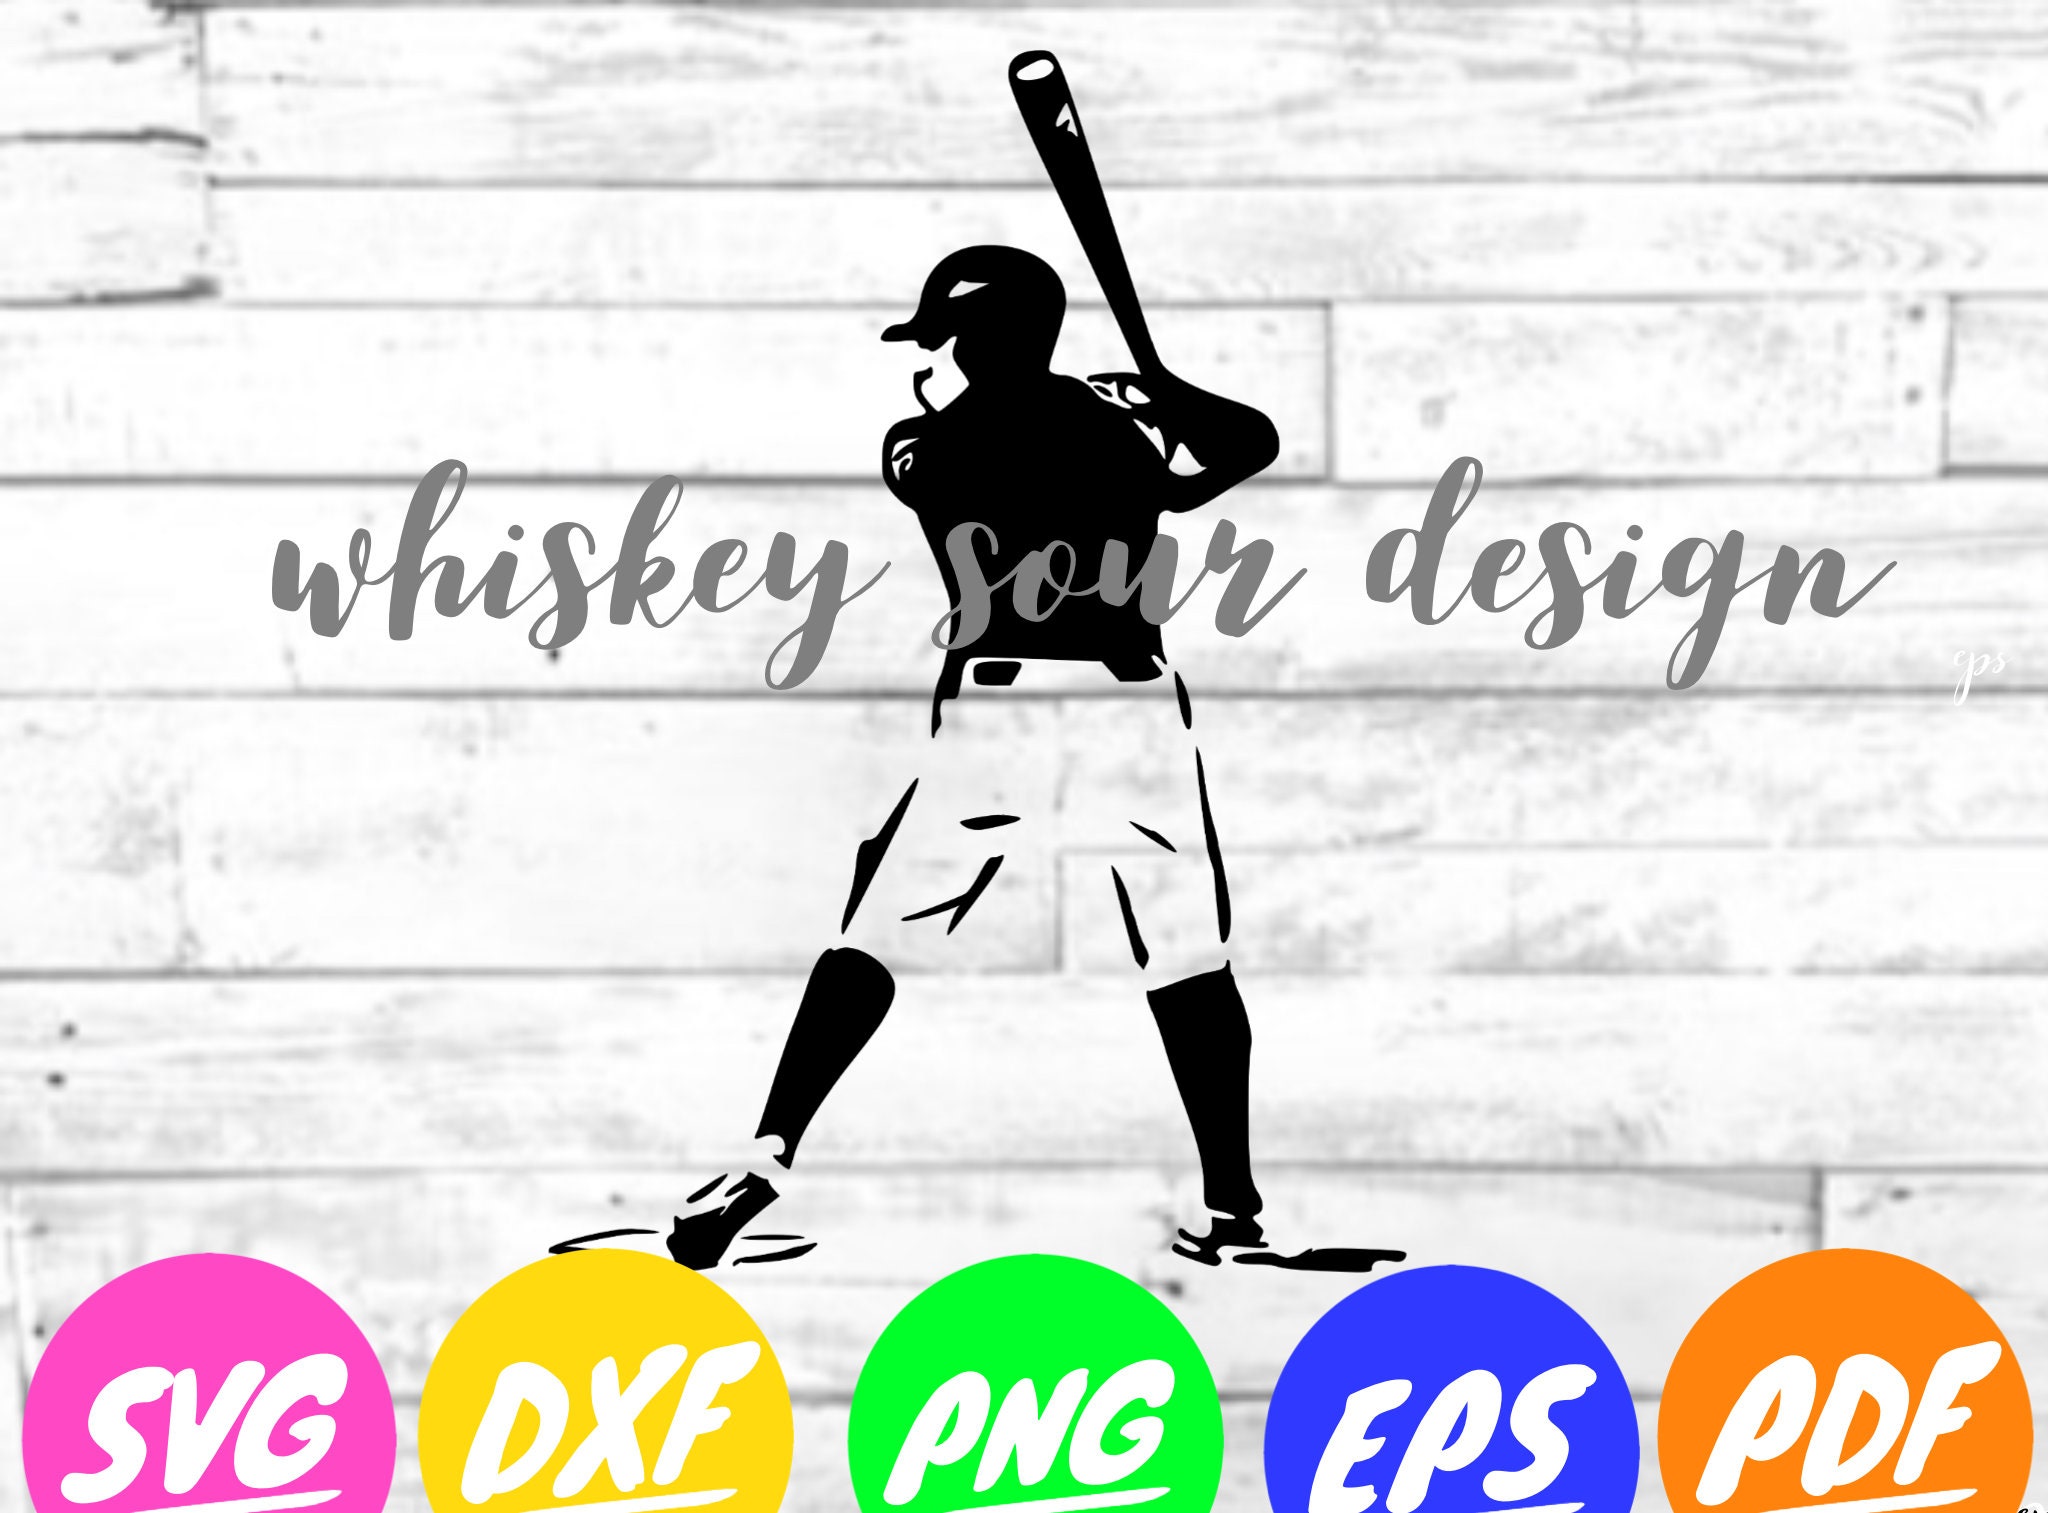 Baseball Player Batter Hitting Ball B&W Clipart Digital Download